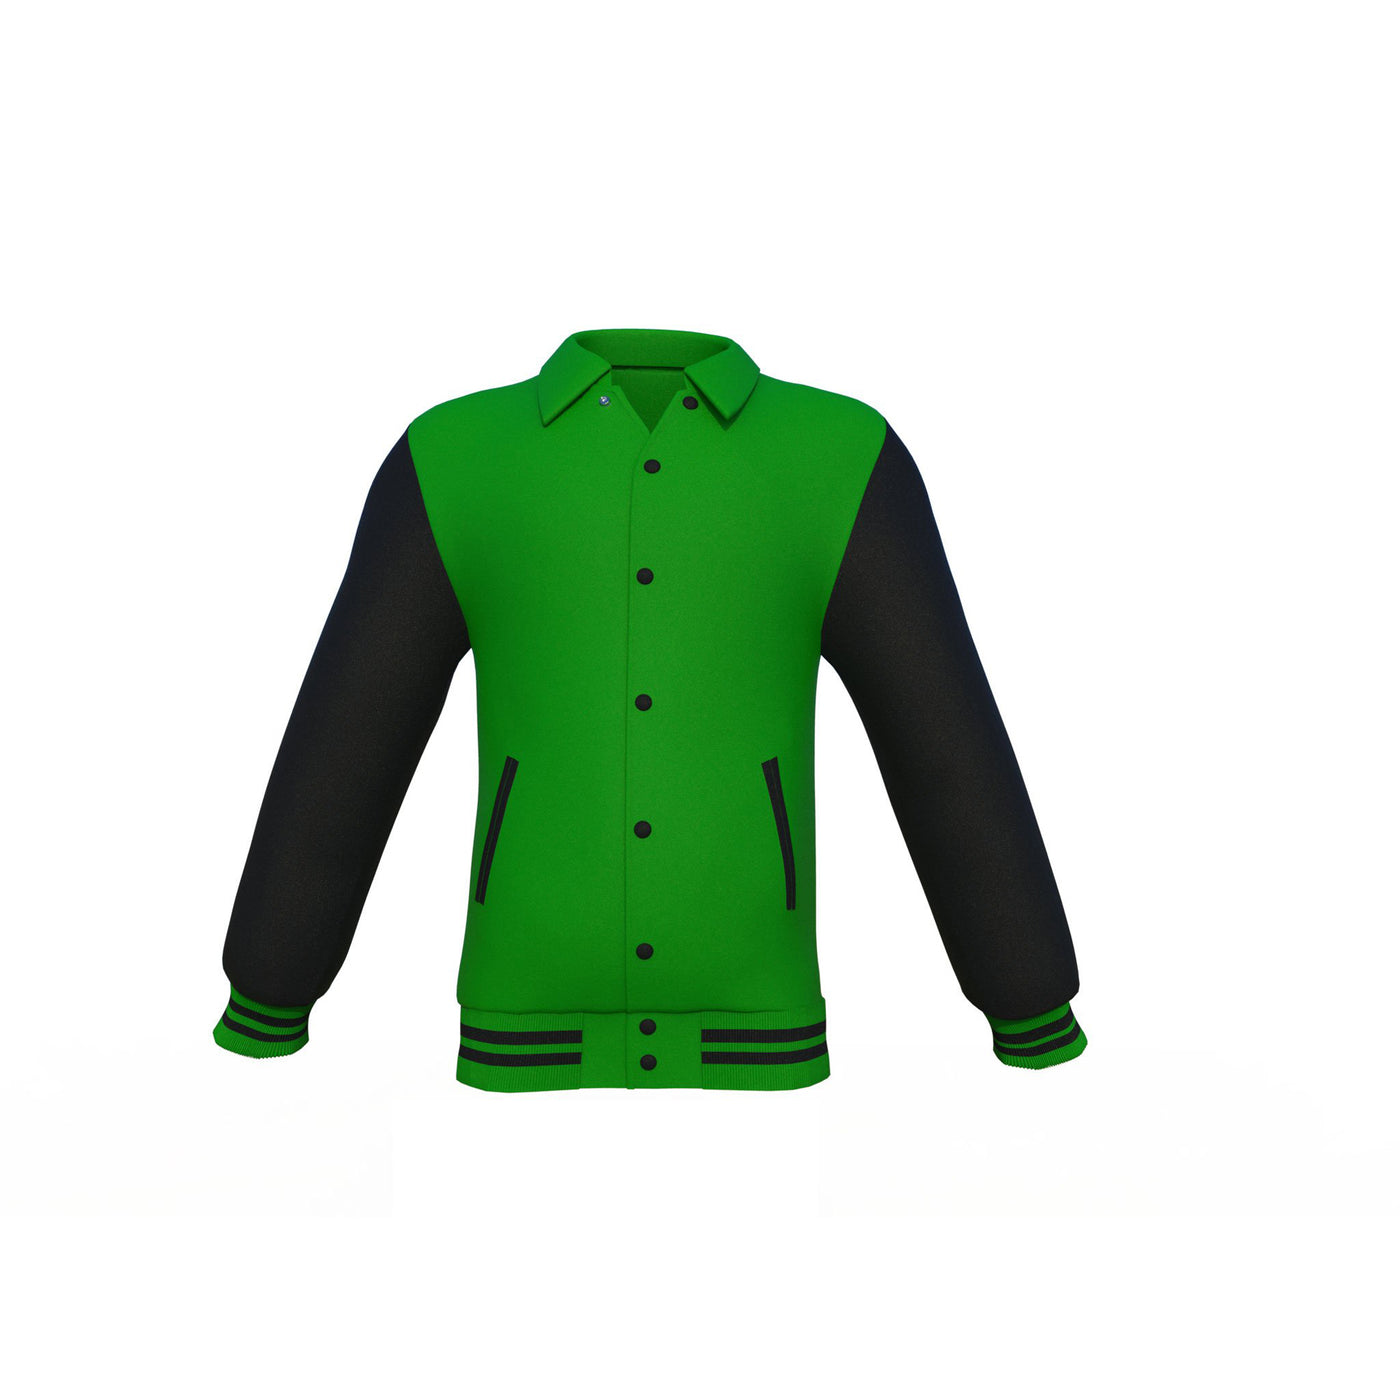 Comfortable Black Sleeves Dark Green Varsity Letterman Jacket 